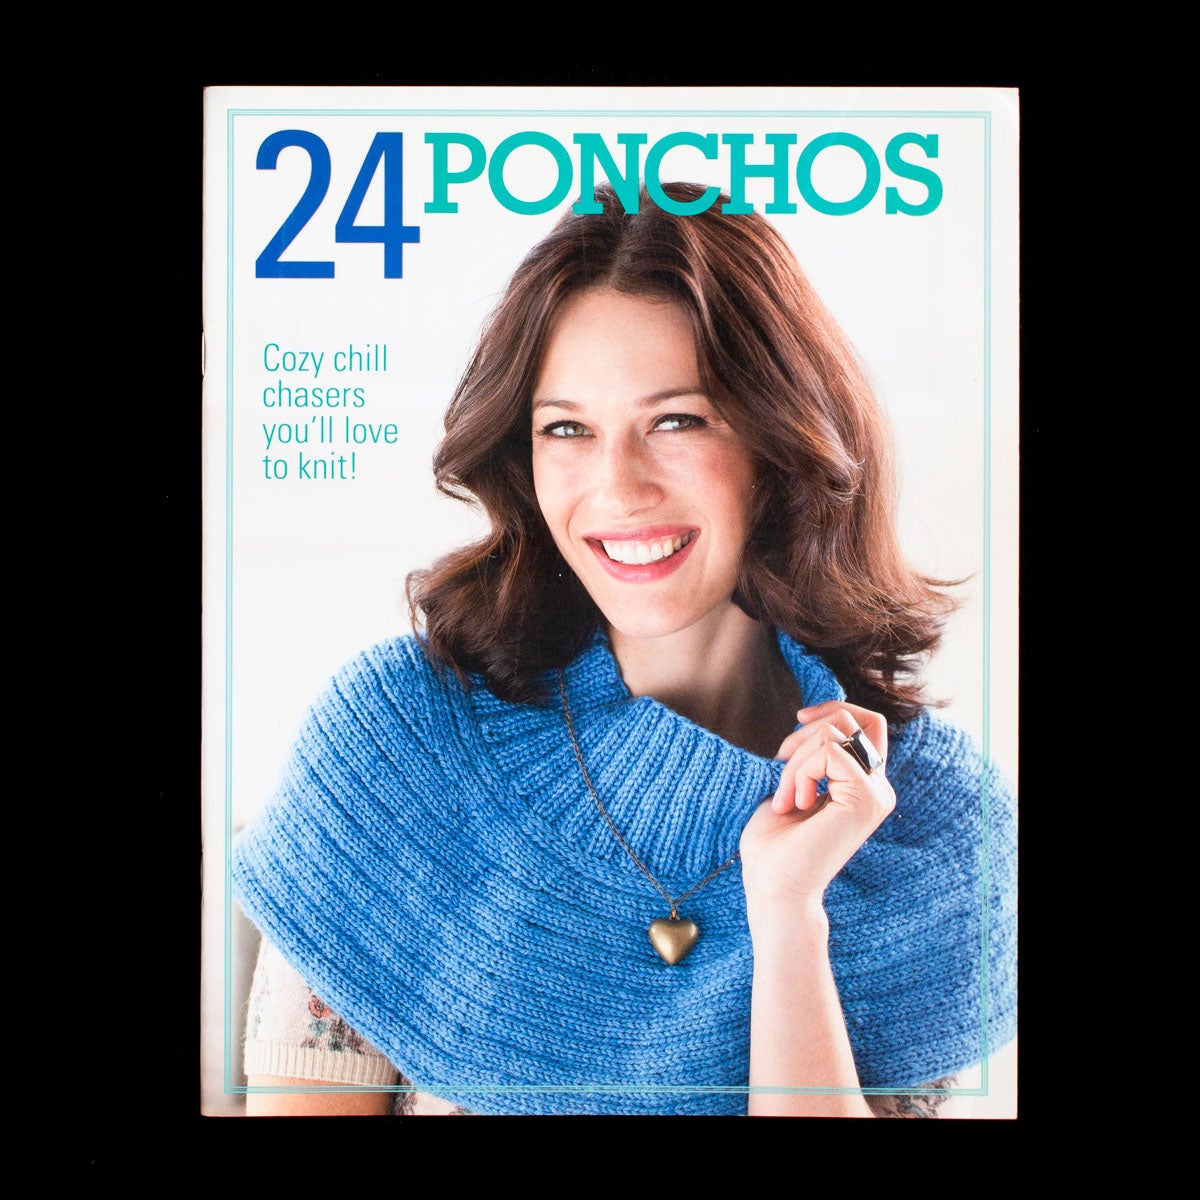 24 Ponchos, Lana Del Rey, Jack Deutsch, photographer